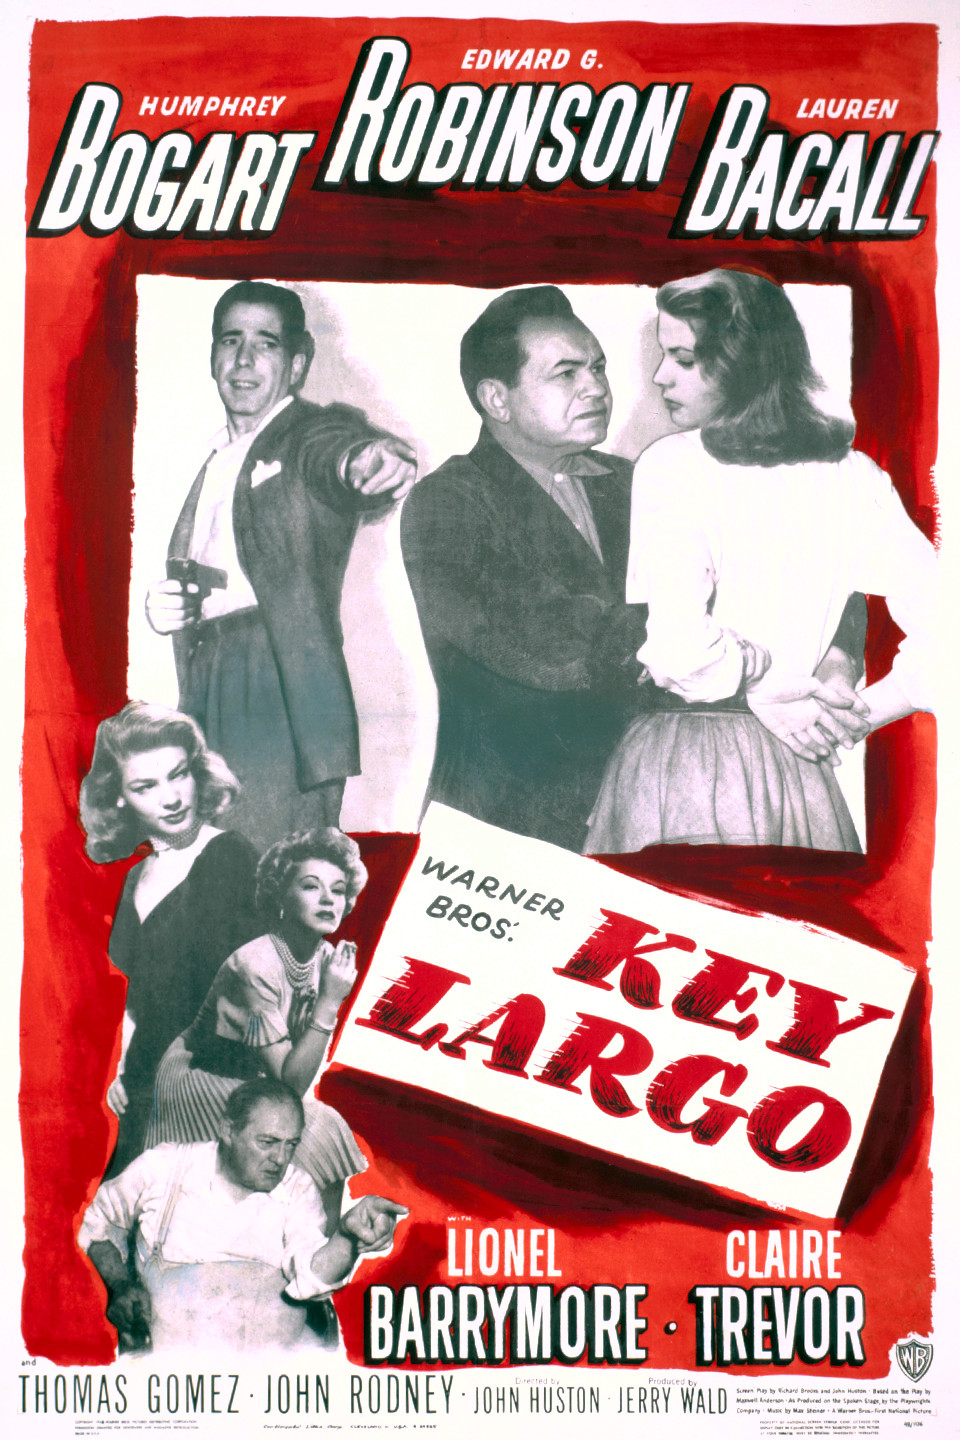 key largo movie length